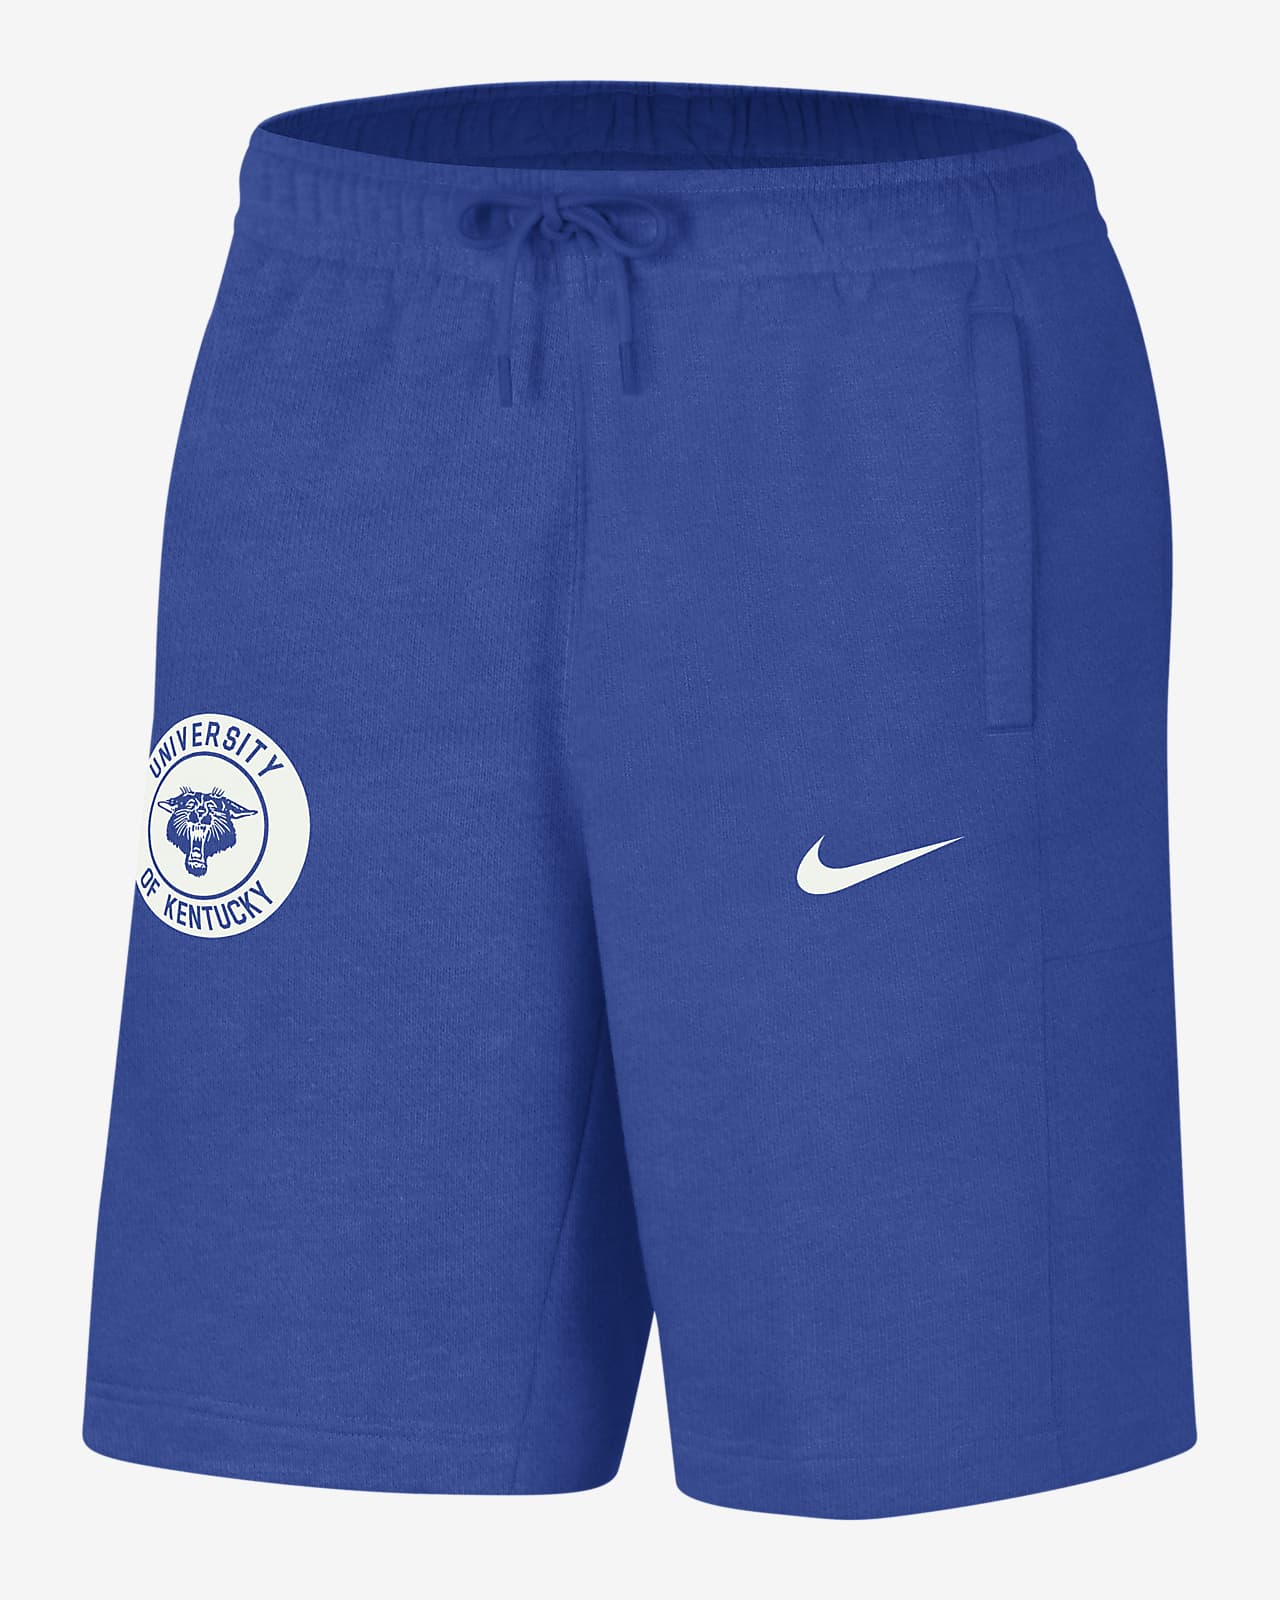 Kentucky Men's Nike College Shorts